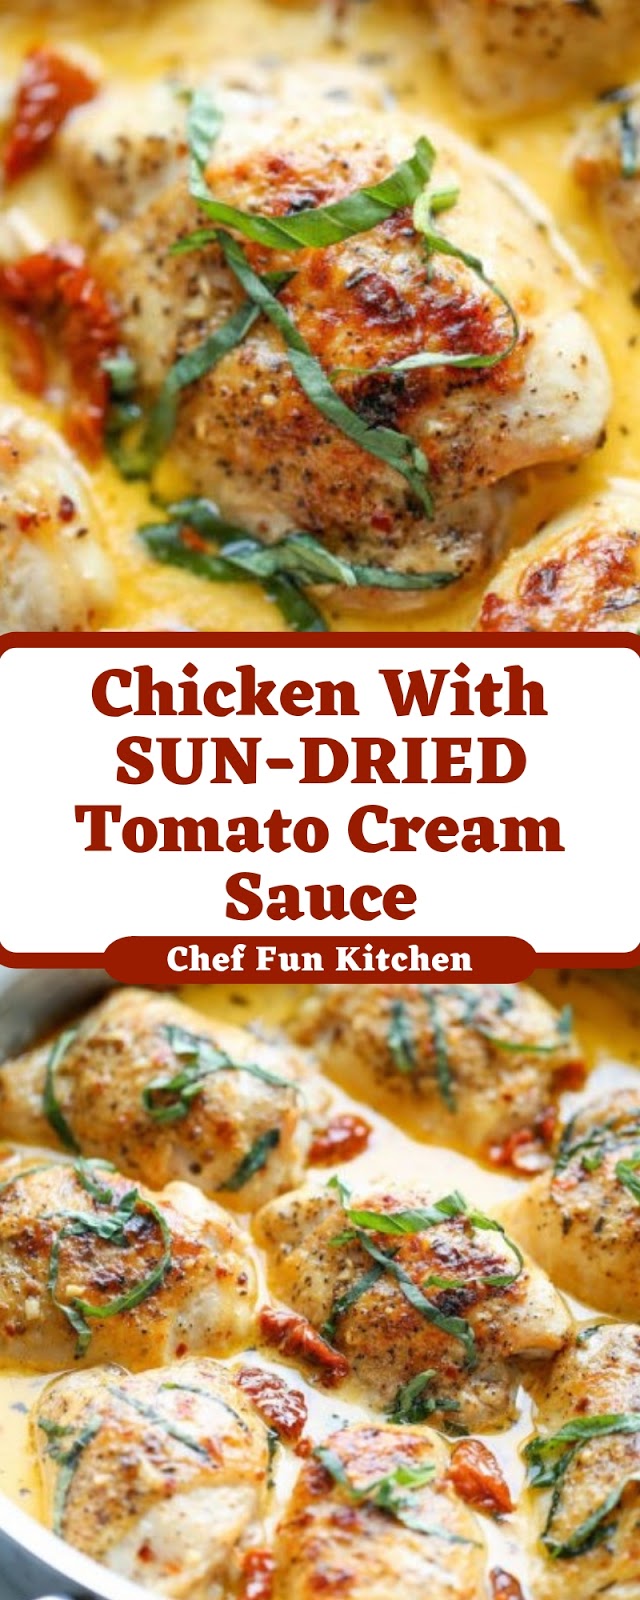 Chicken With SUN-DRIED Tomato Cream Sauce